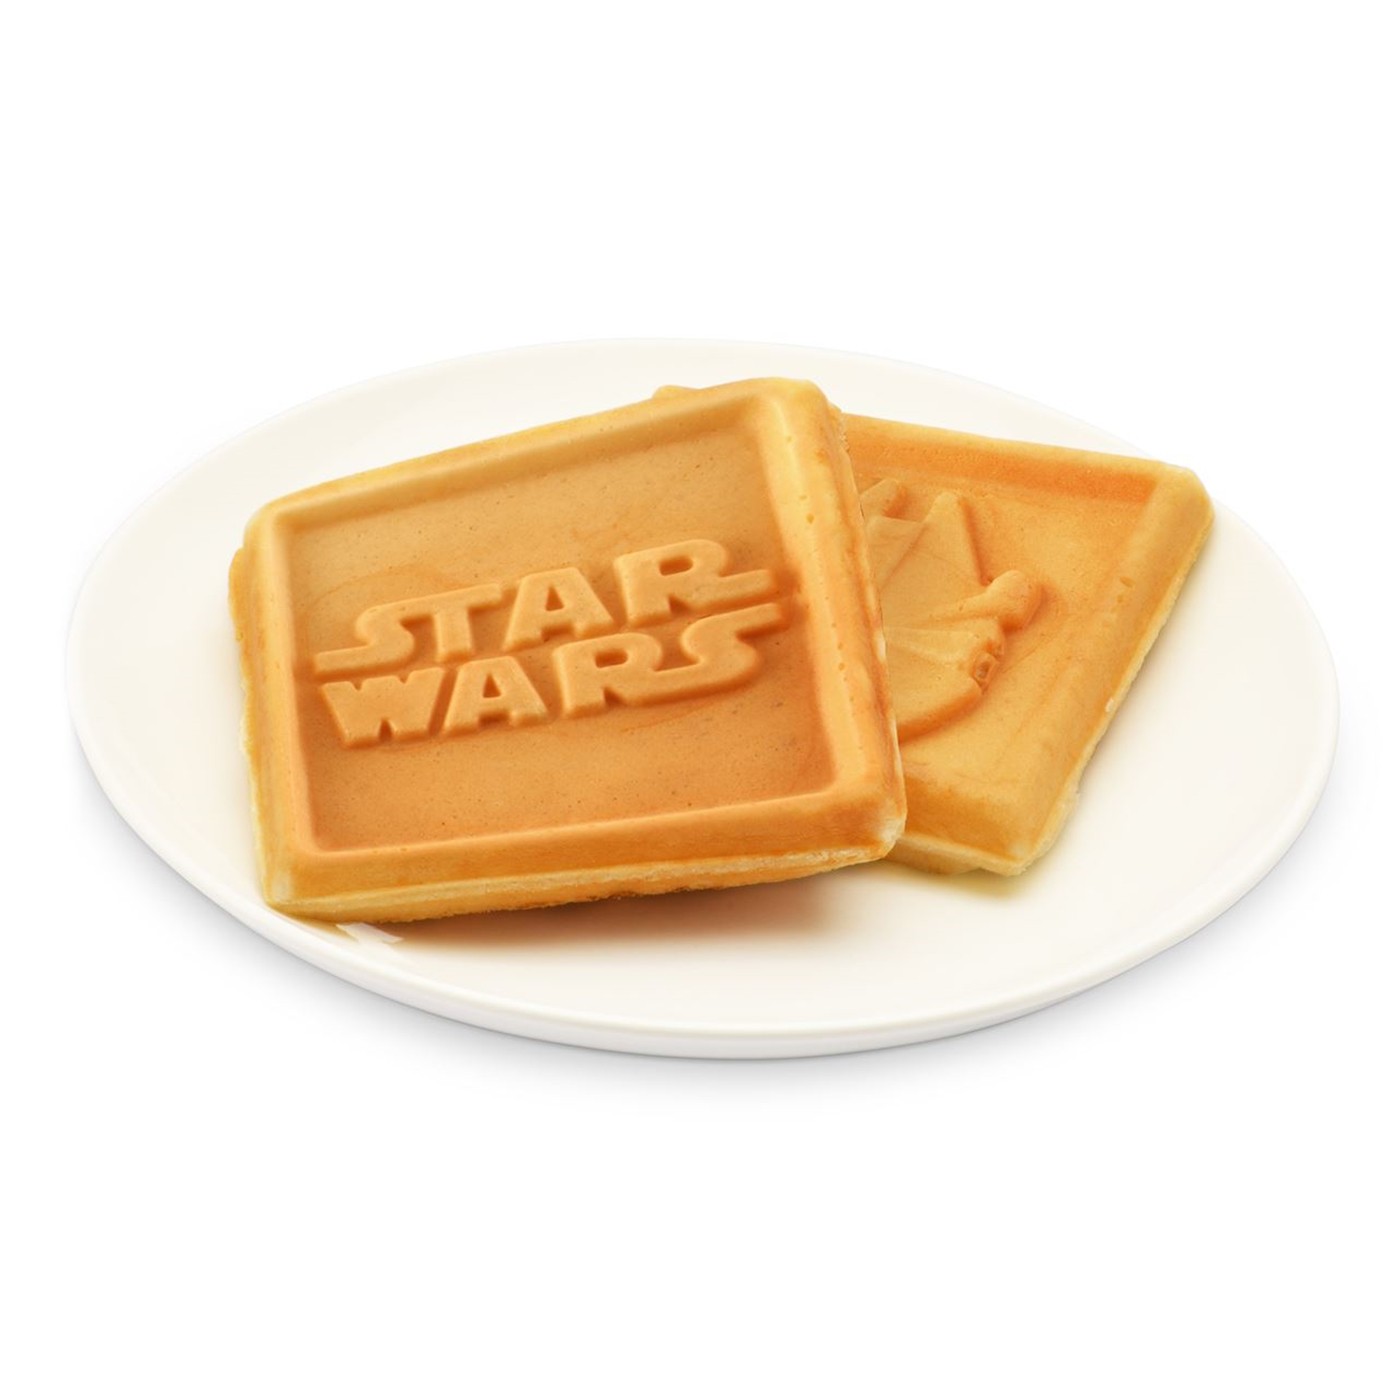 Star Wars Four Waffle Maker